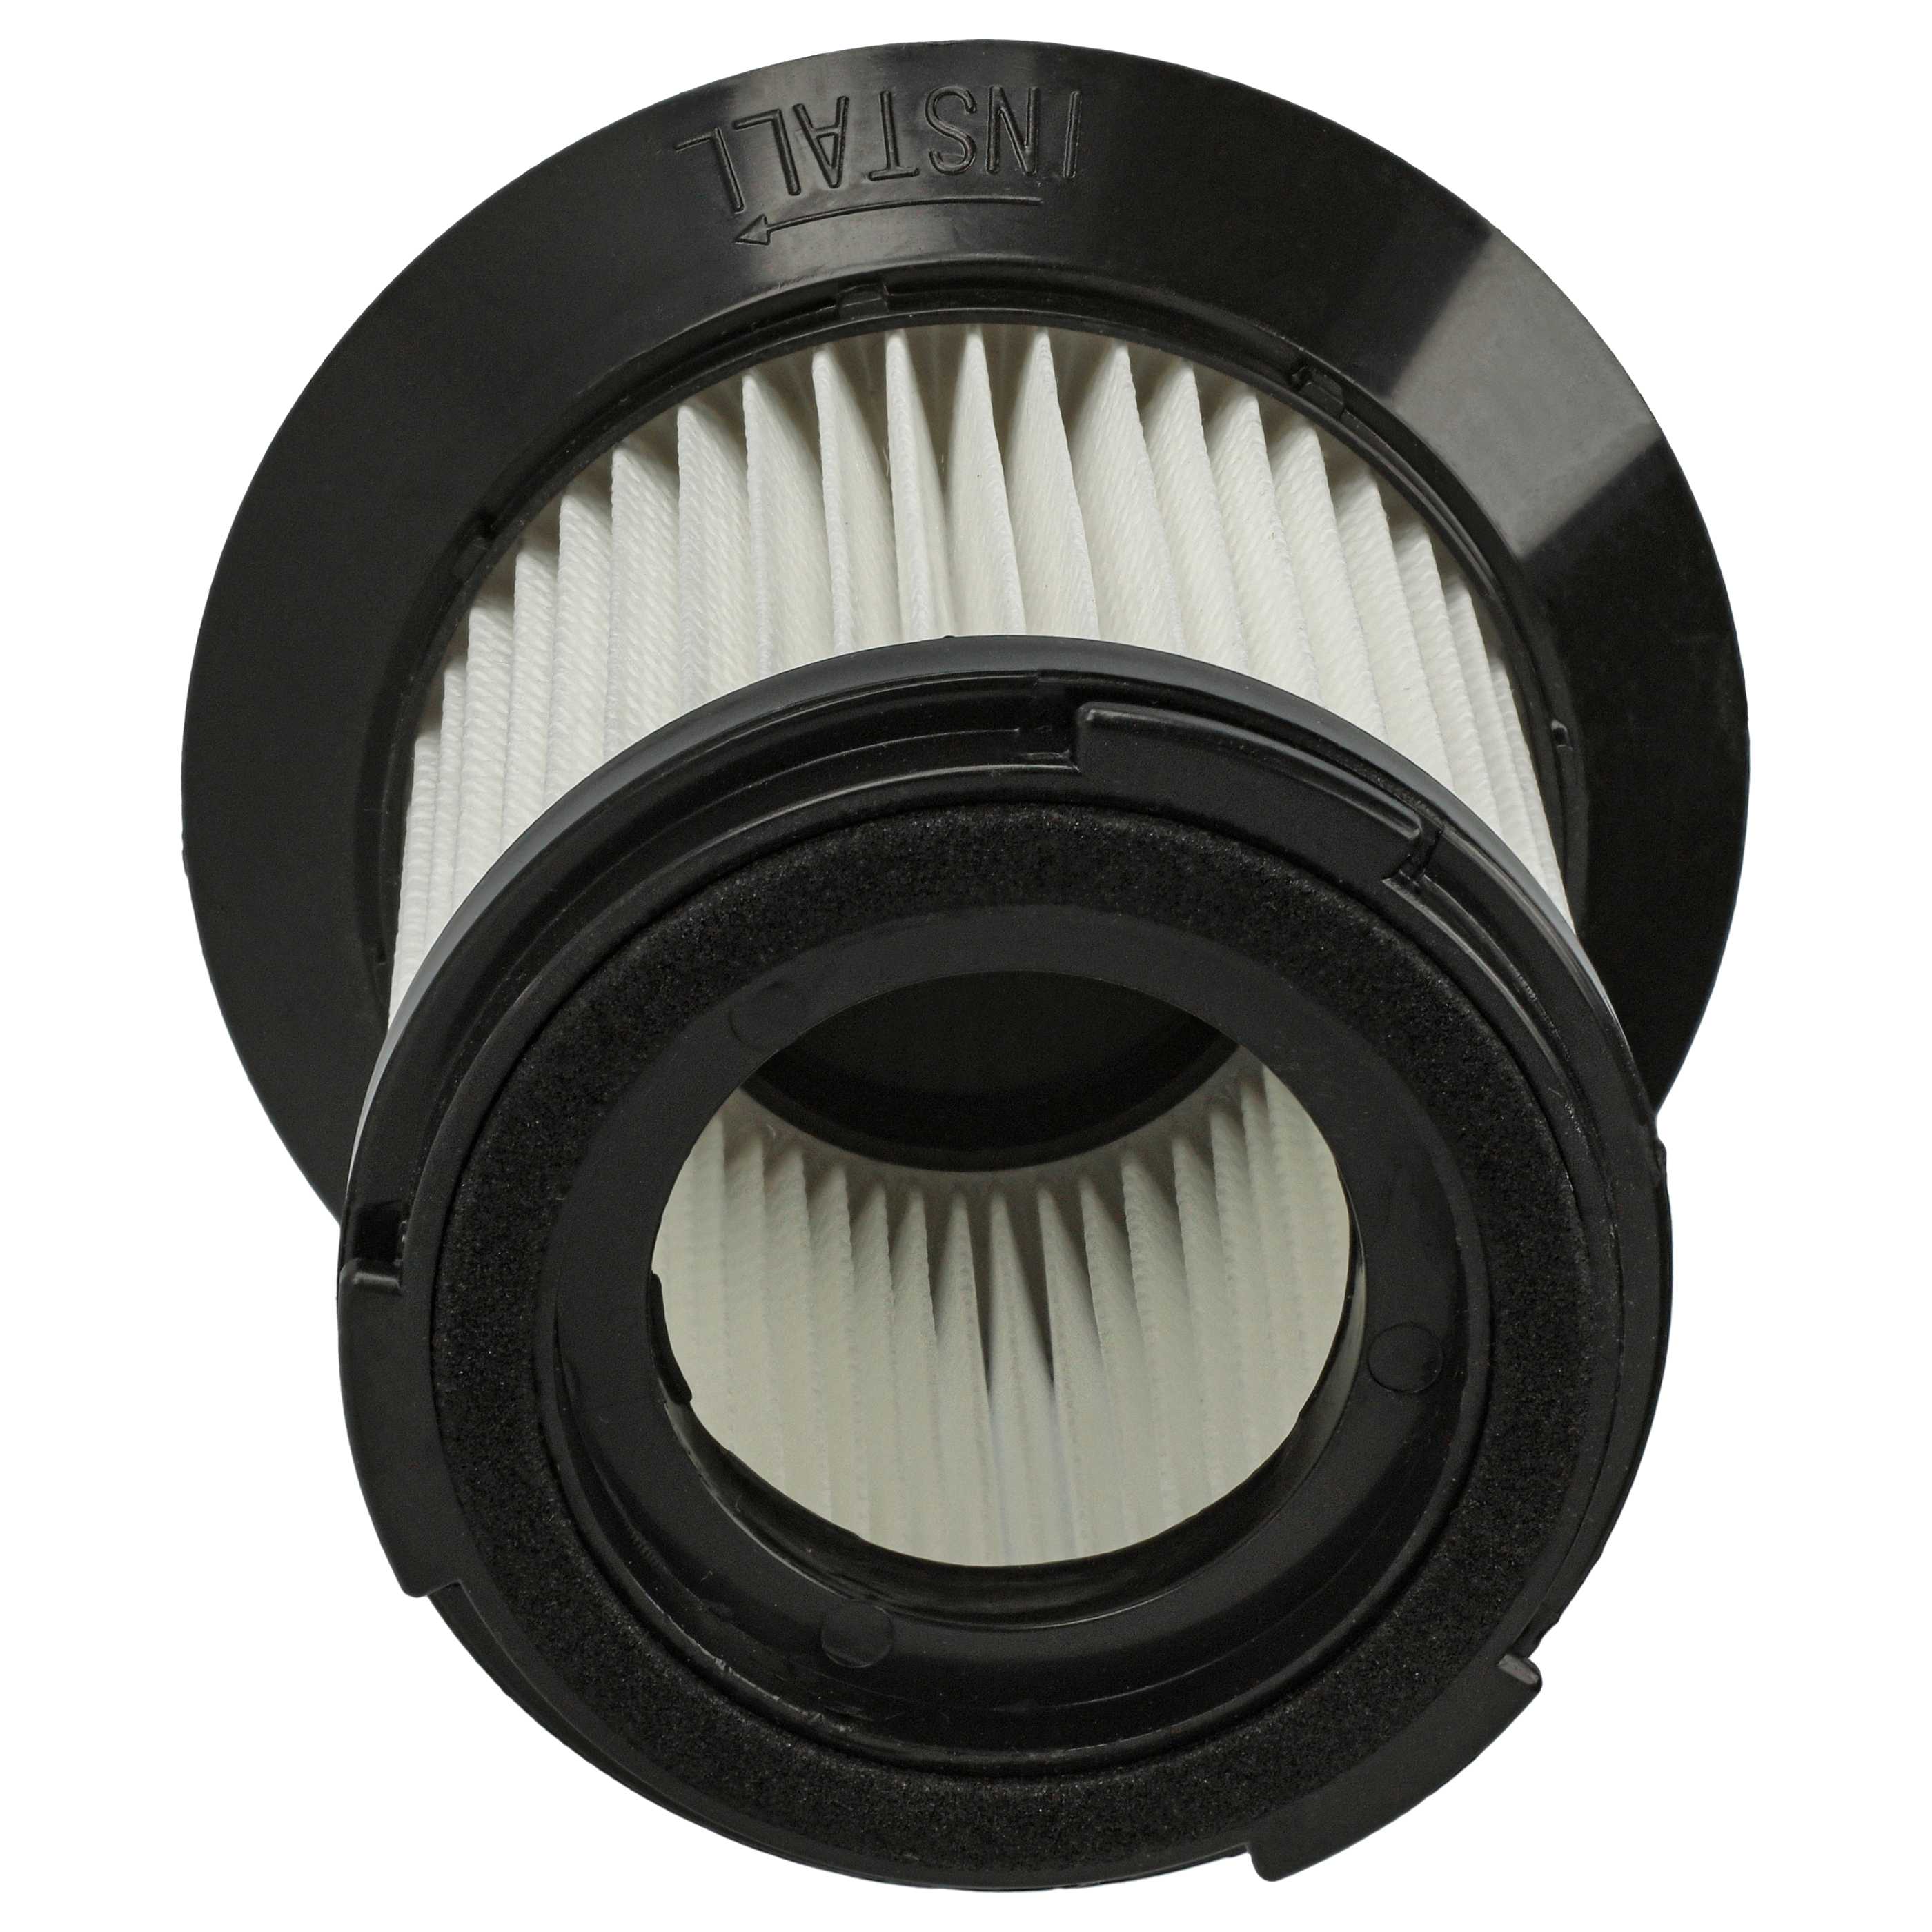 4x HEPA filter suitable for Sichler Zyklon BLS-200 Vacuum Cleaner